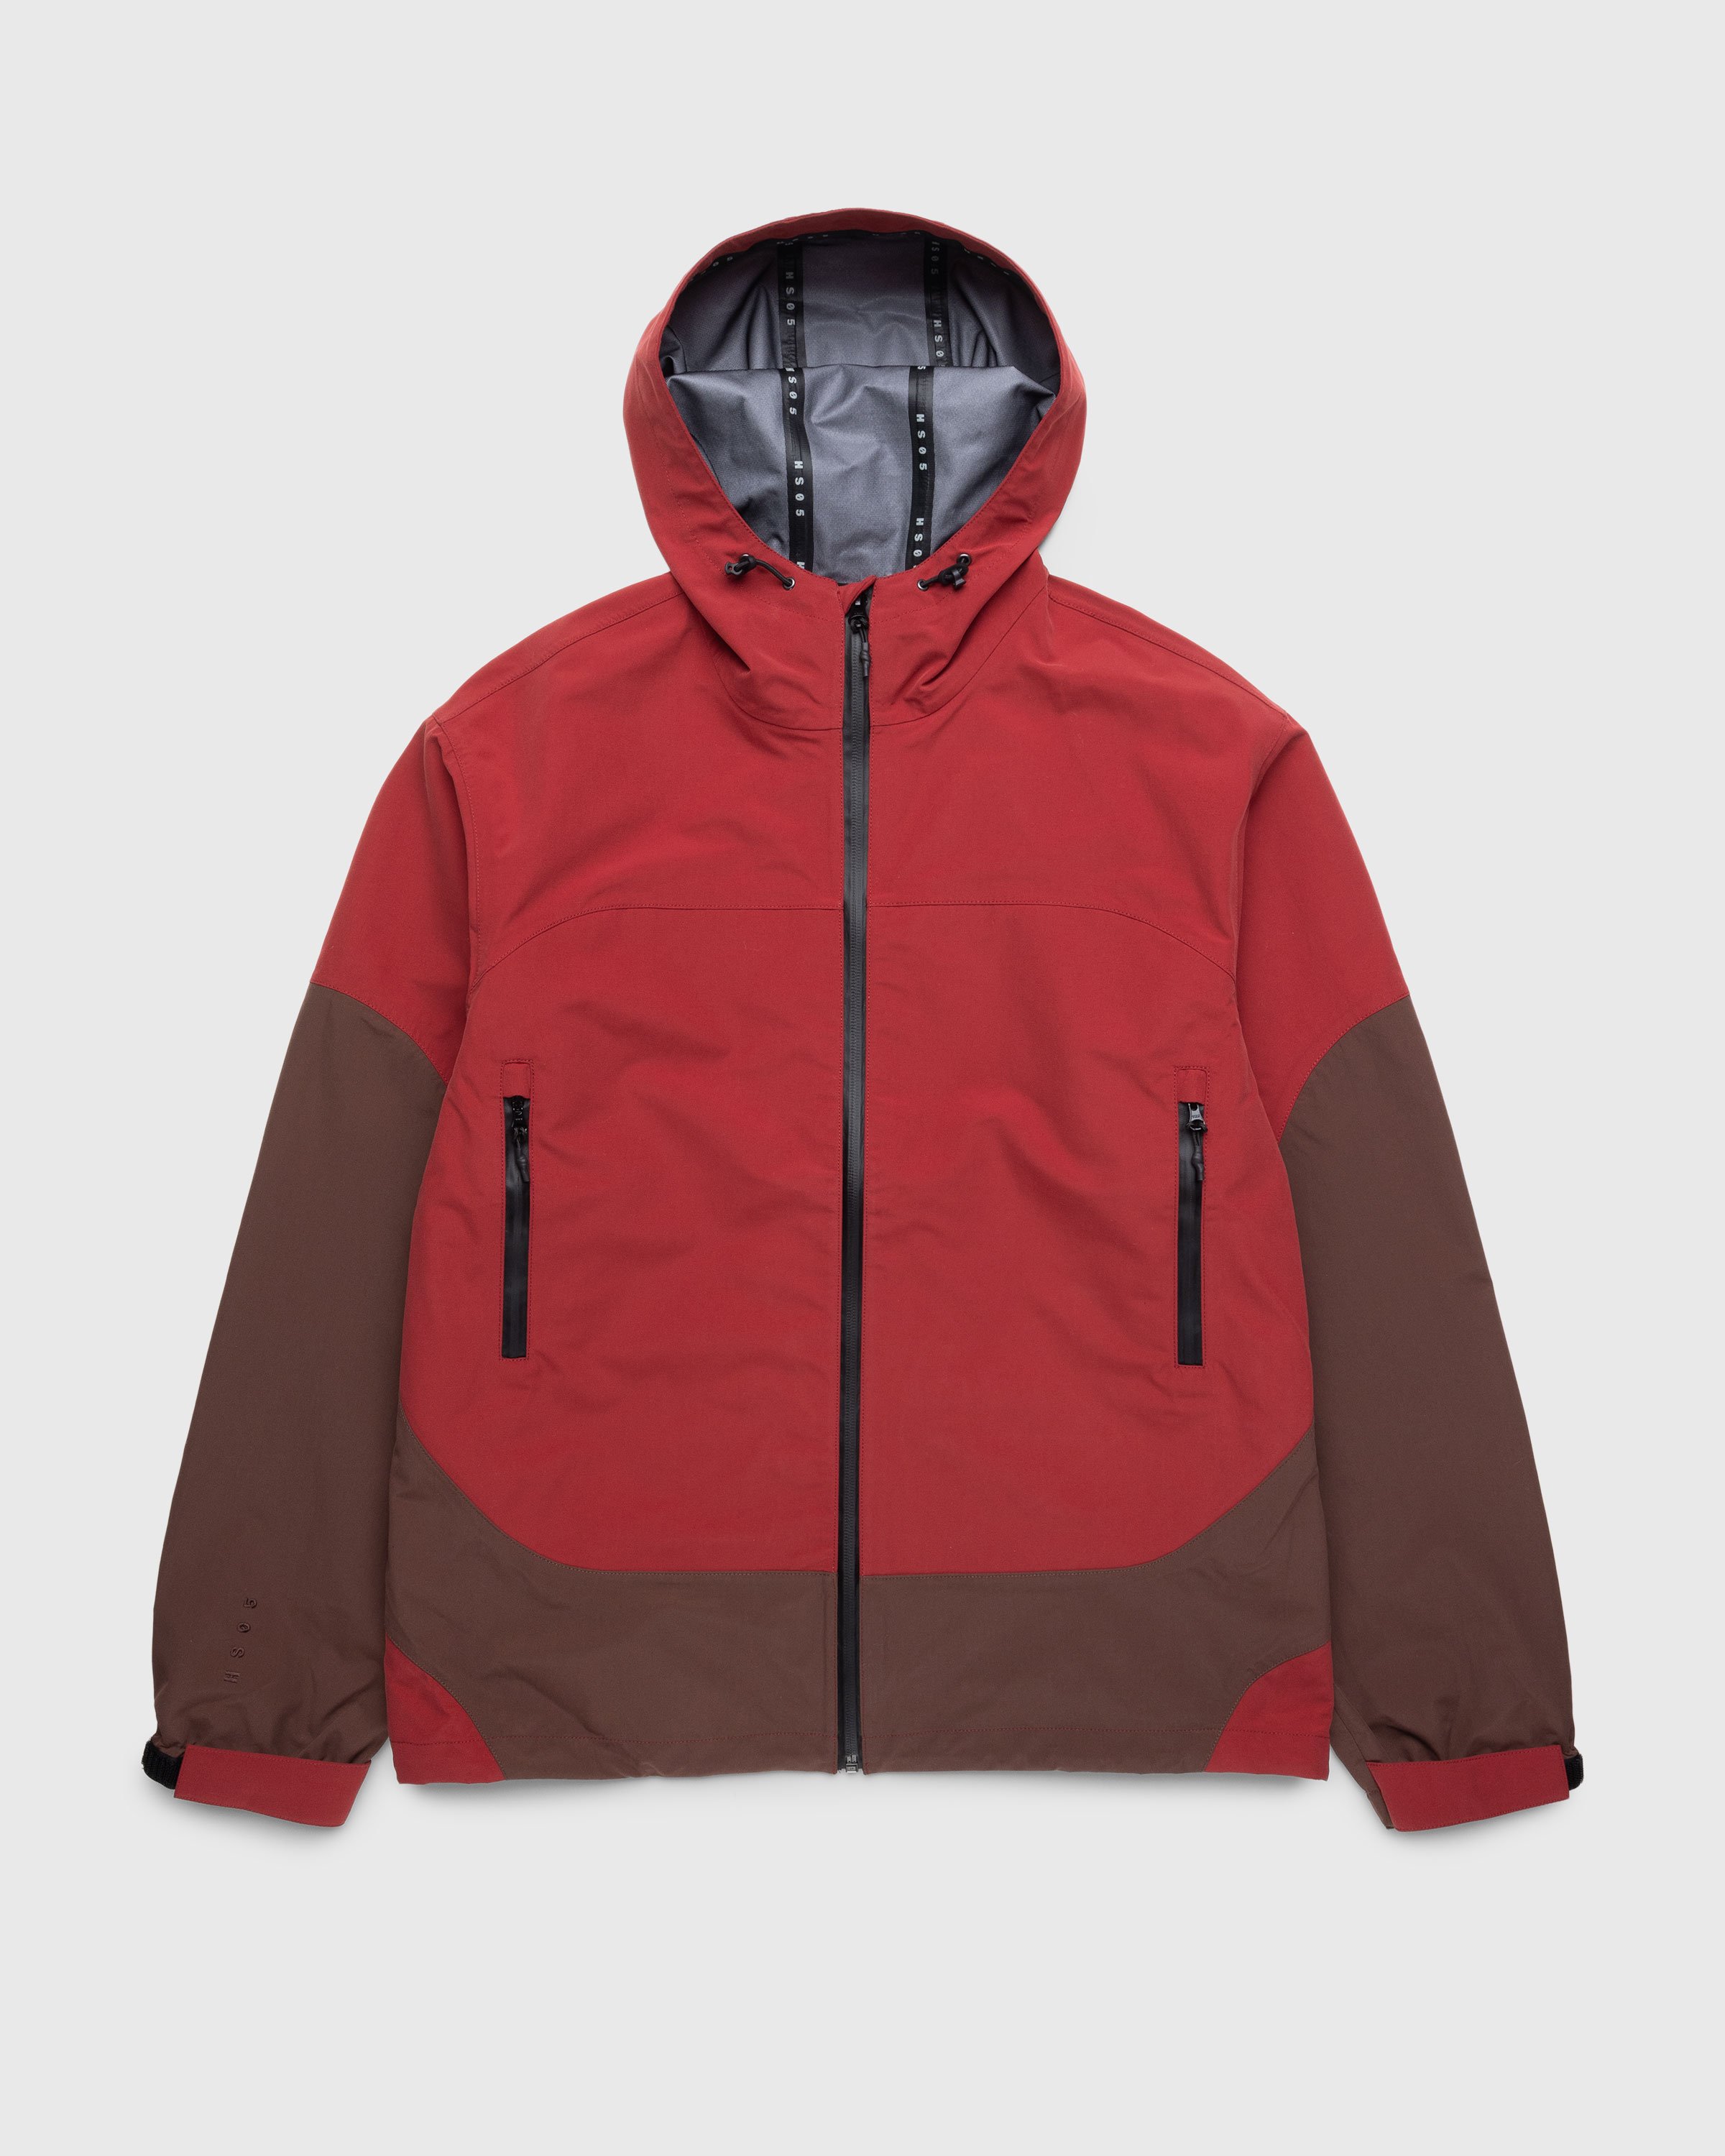 Highsnobiety HS05 - 3 Layer Taped Nylon Jacket Ruby - Clothing - Red - Image 1